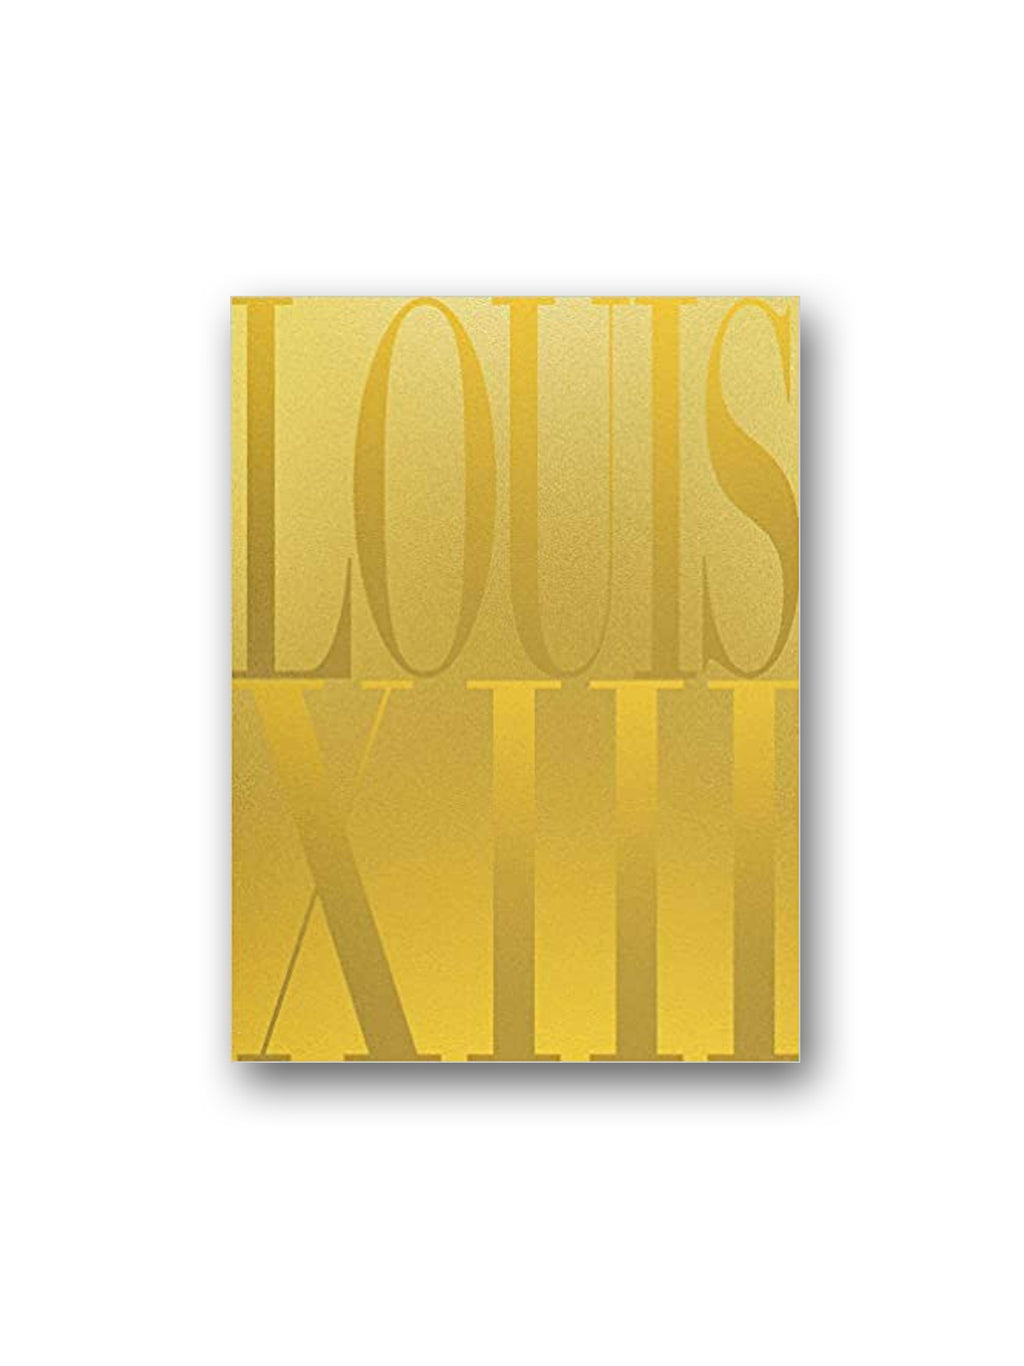 Louis XIII Cognac : The Thesaurus